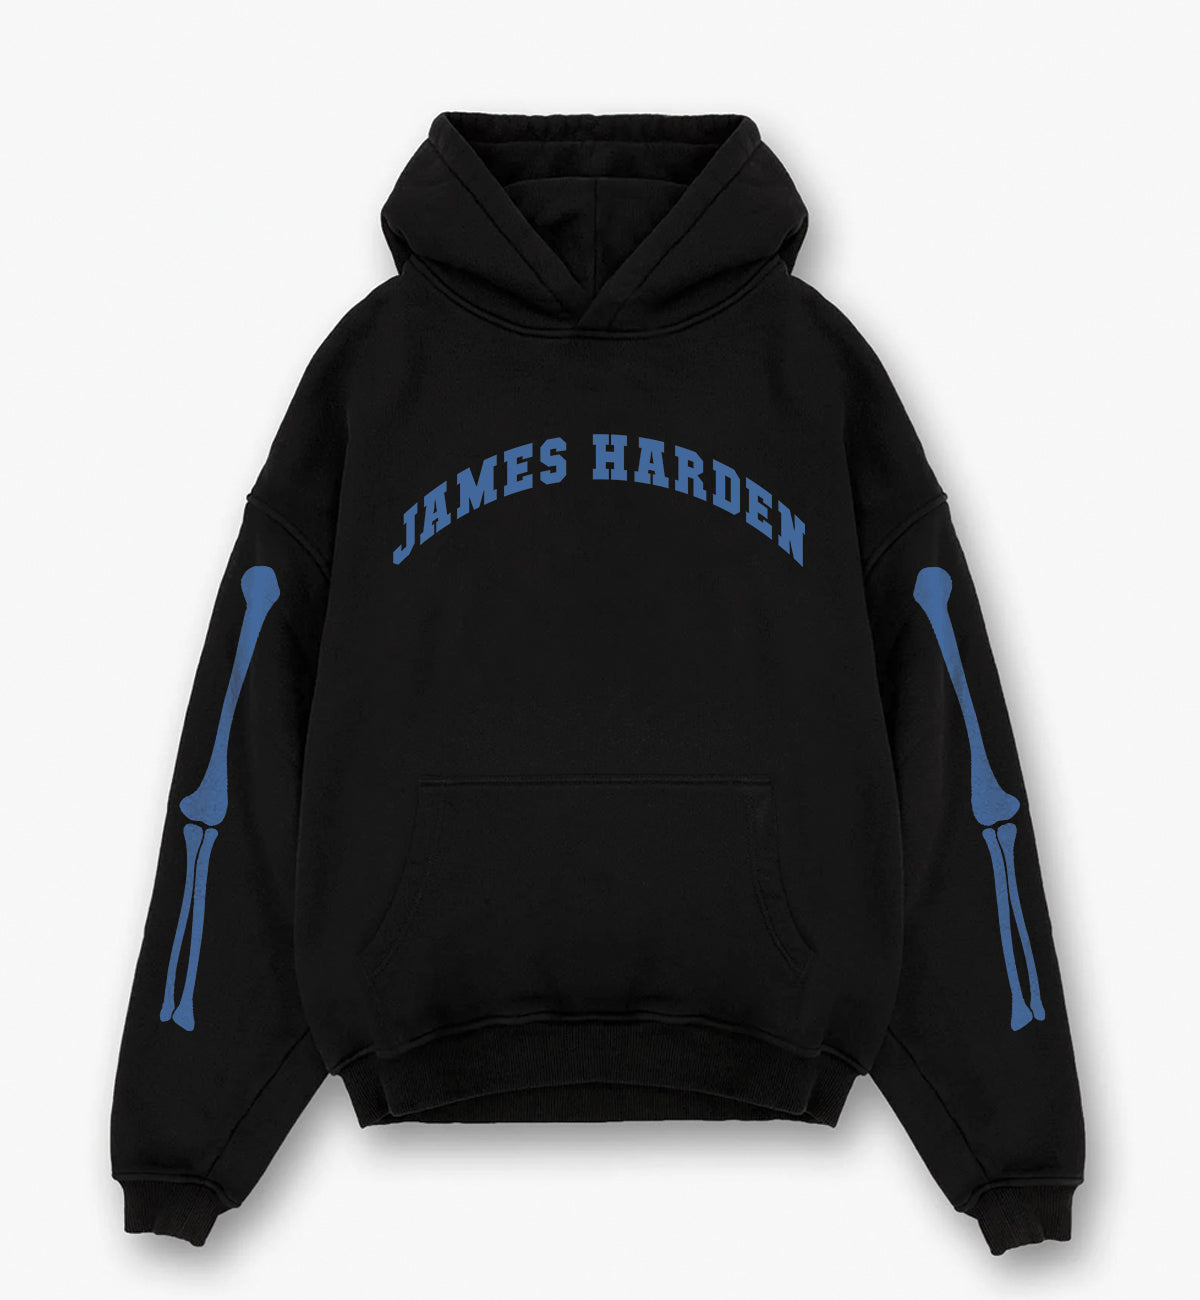 James Harden Designed Oversized Hoodie